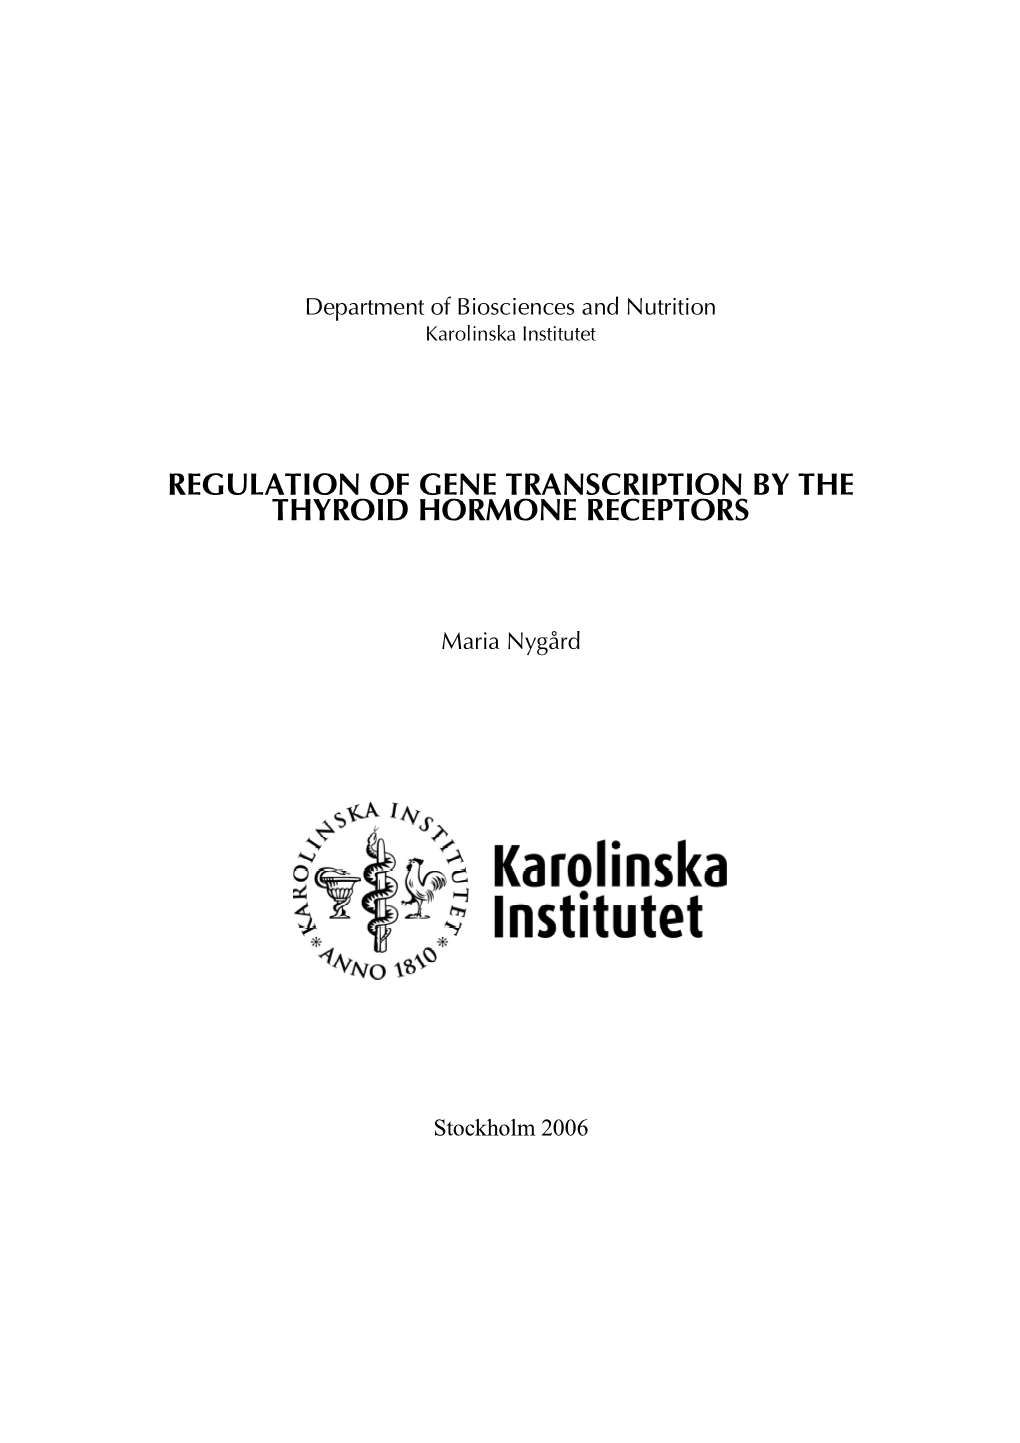 Regulation of Gene Transcription by the Thyroid Hormone Receptors